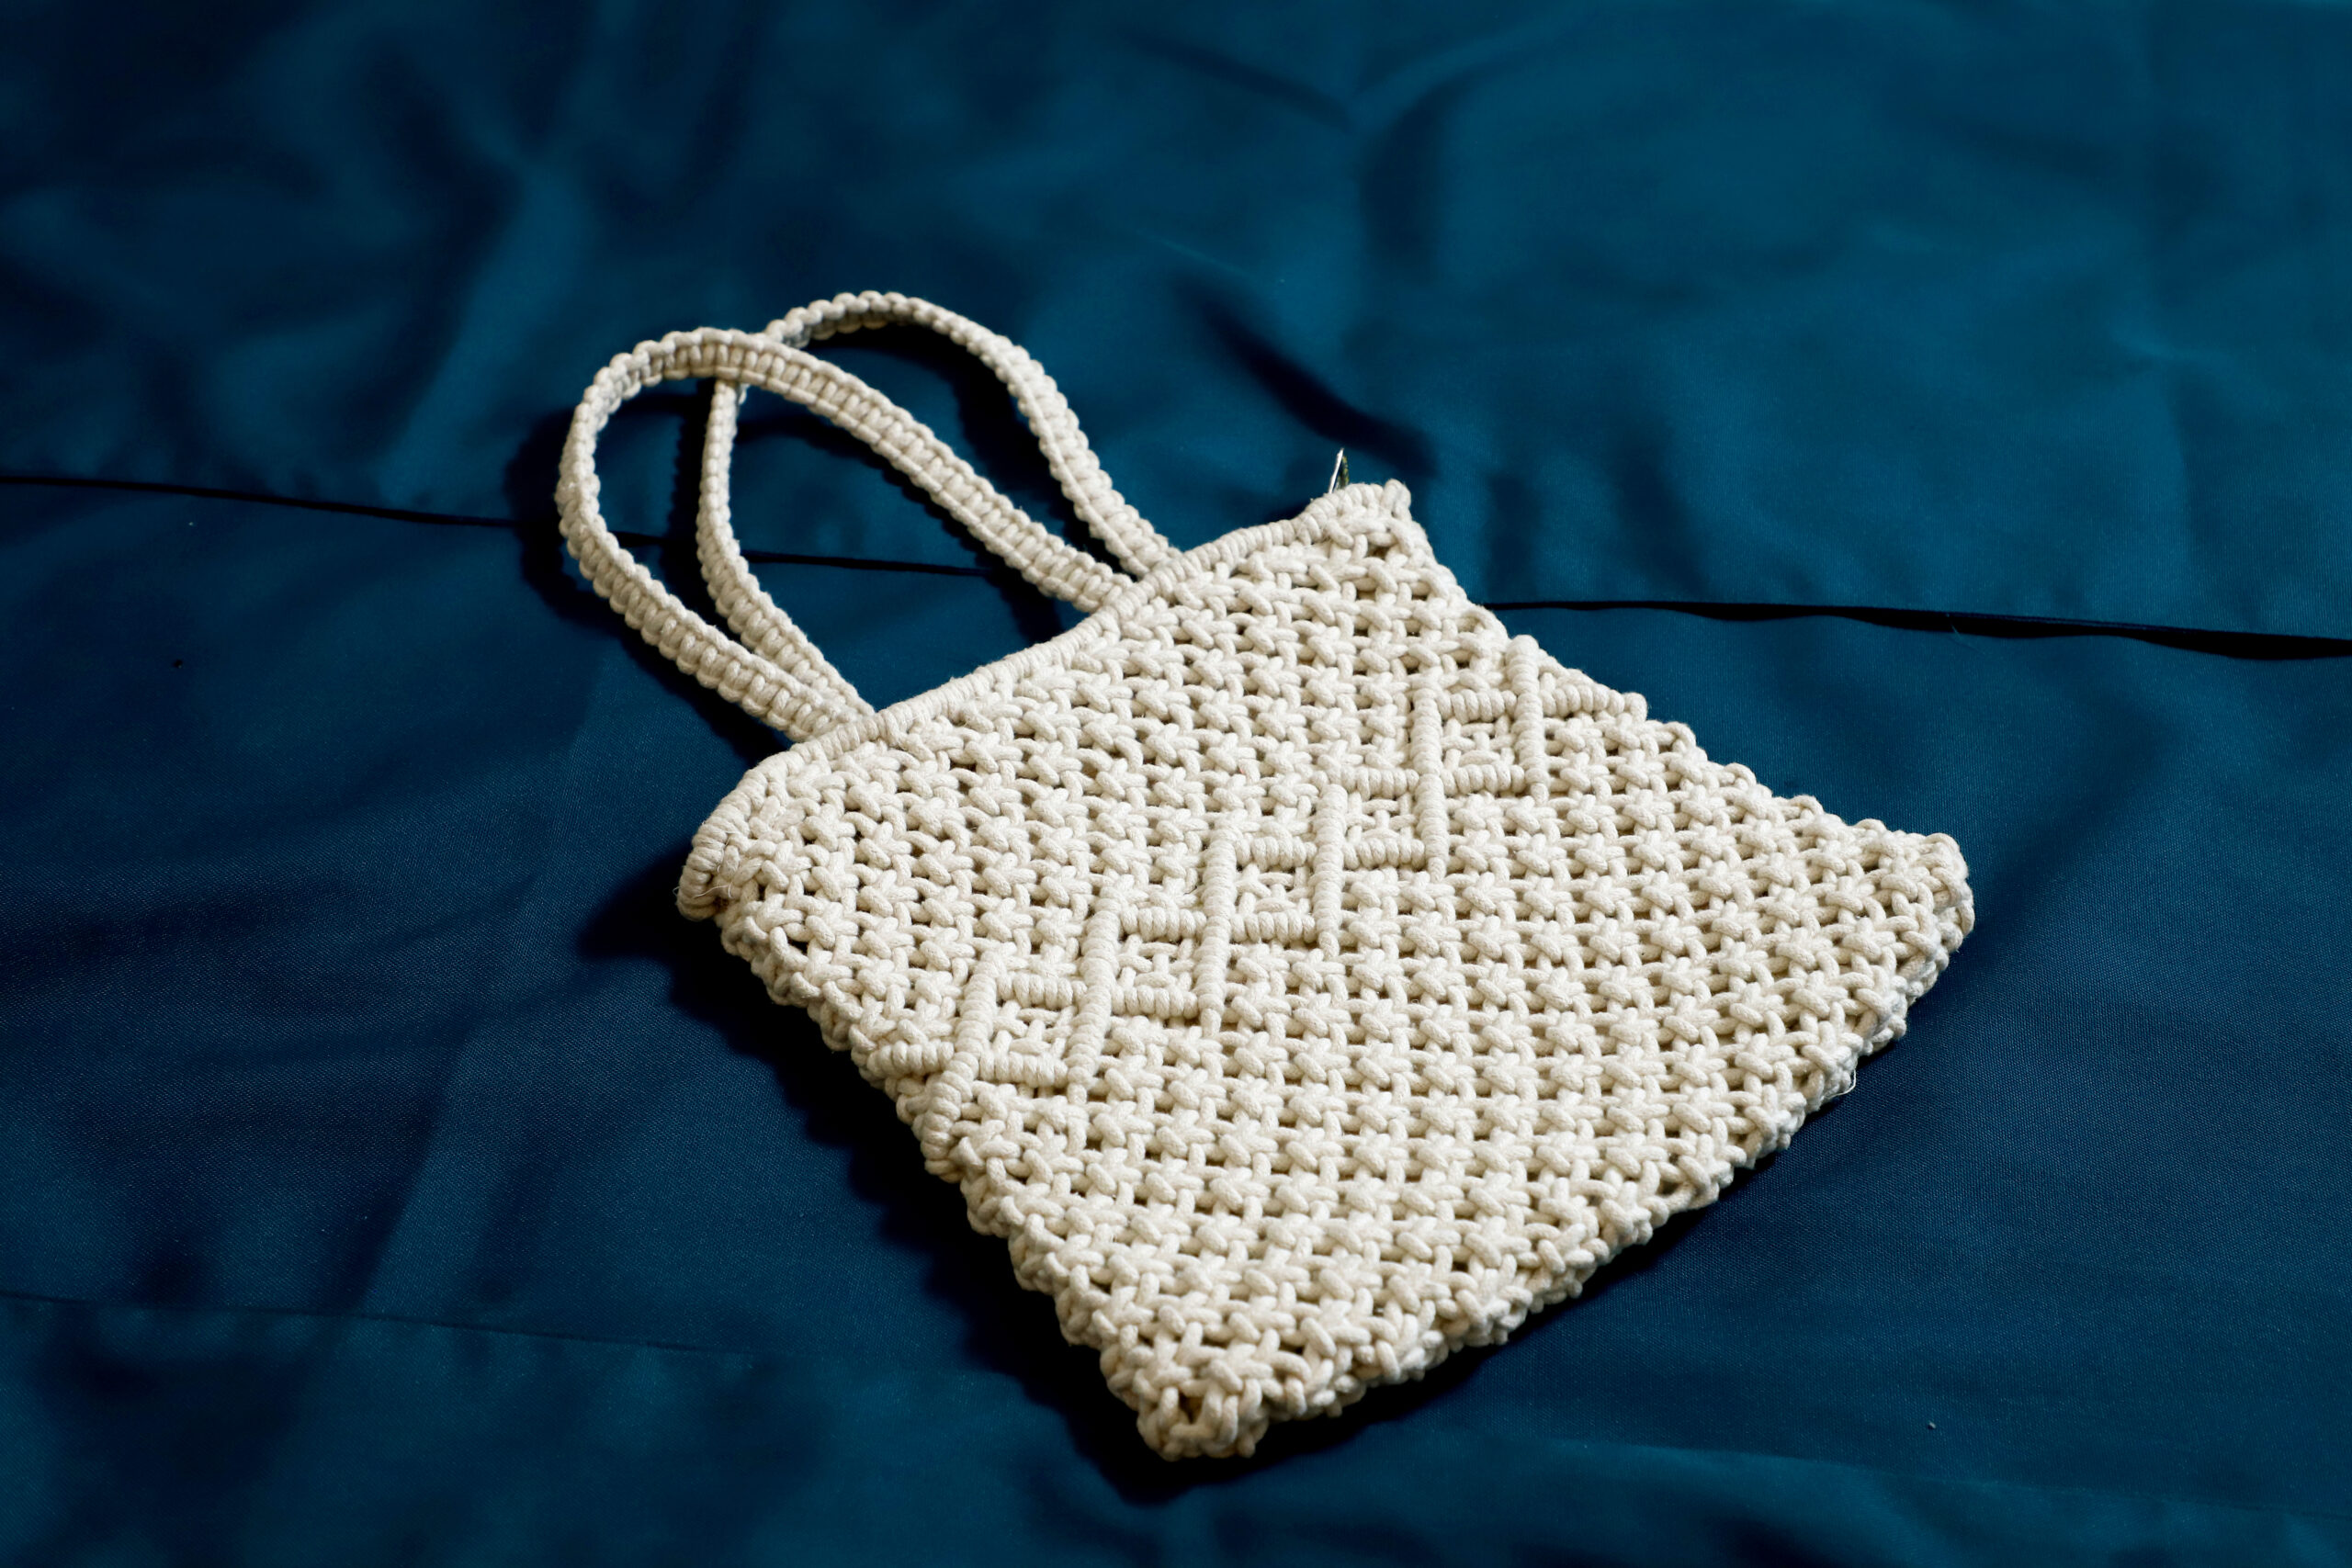 Buy R.R.LALA Macramé handbag with knotted handle Macramé shopping bag, Macramé  bag Macrame Bags Design Handbag Designs Purse macrame hand bag full Natural  color at Amazon.in